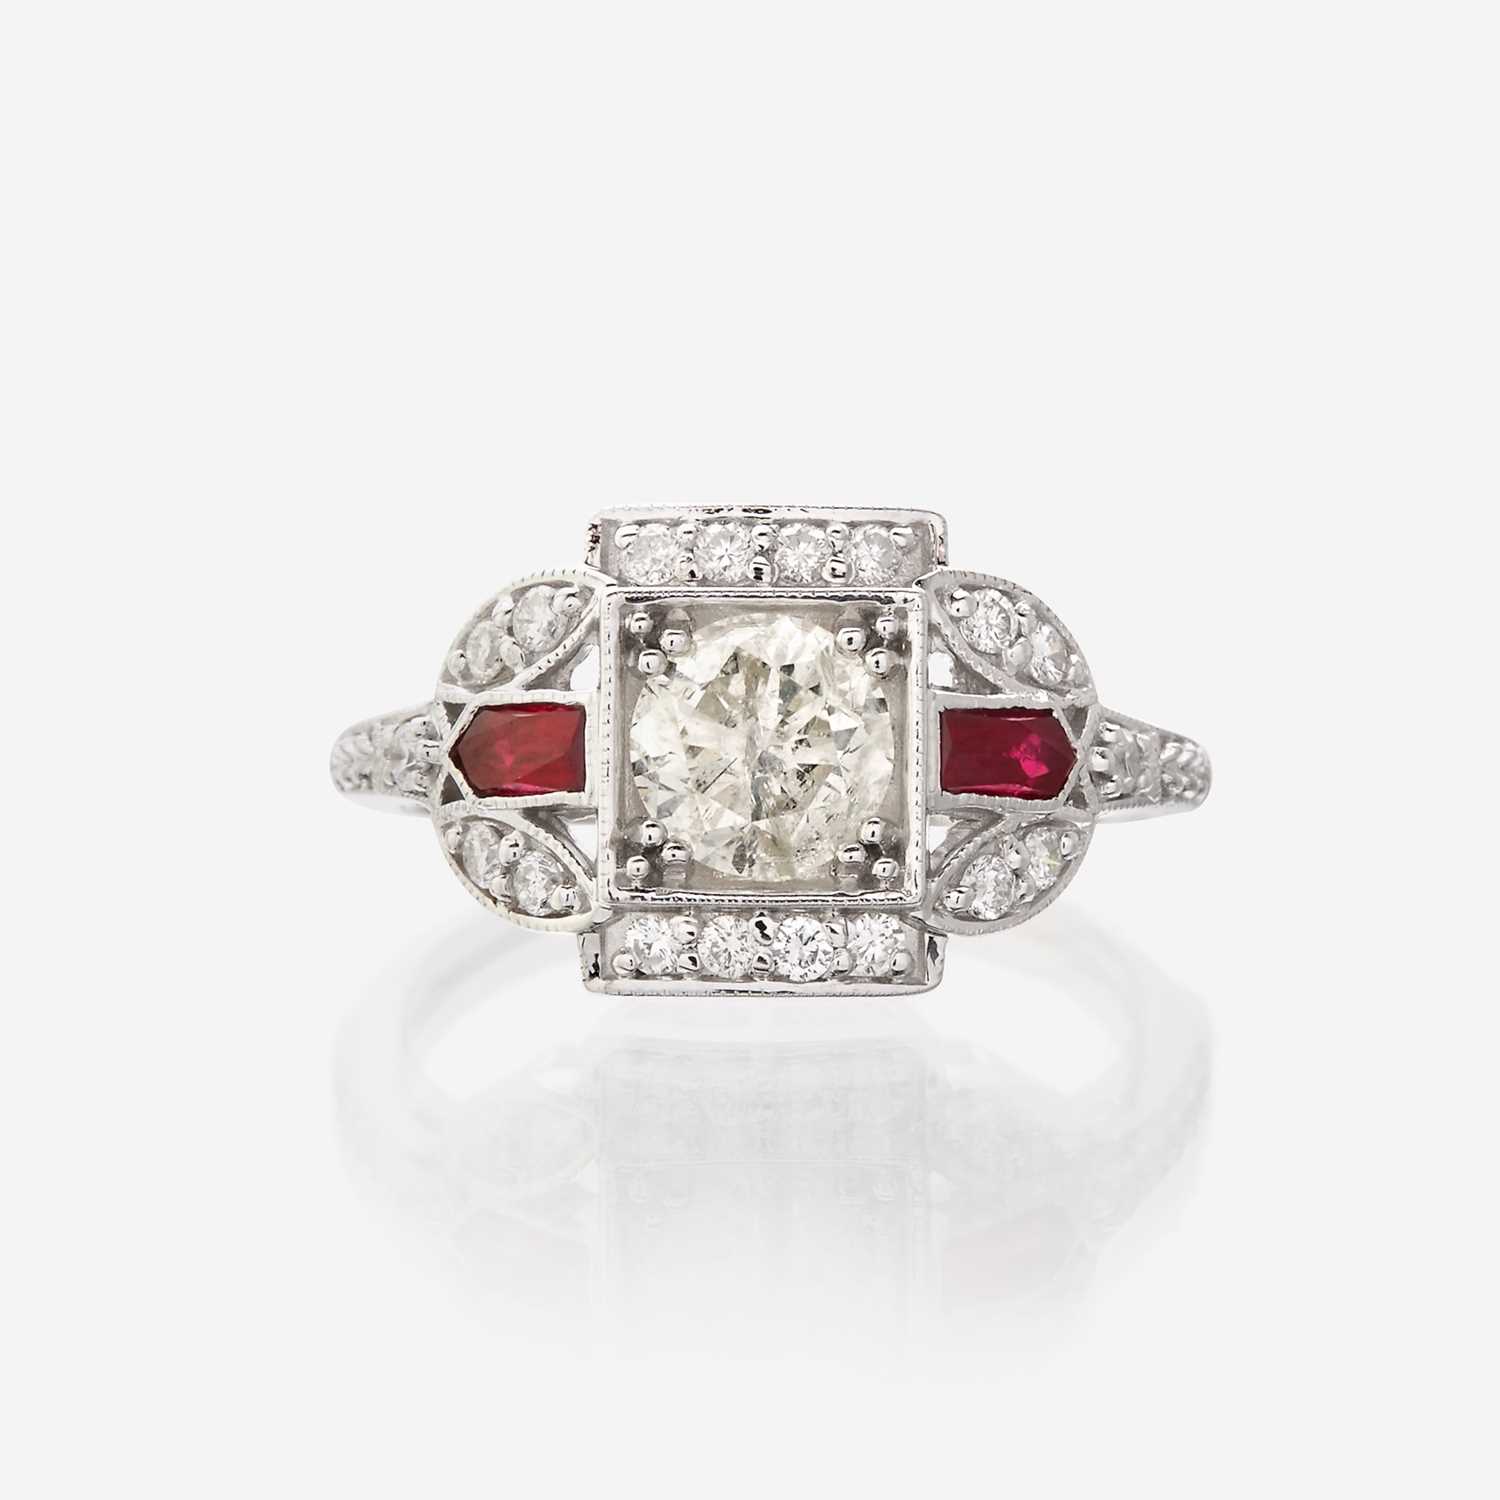 Lot 128 - A diamond, ruby, and eighteen karat white gold ring